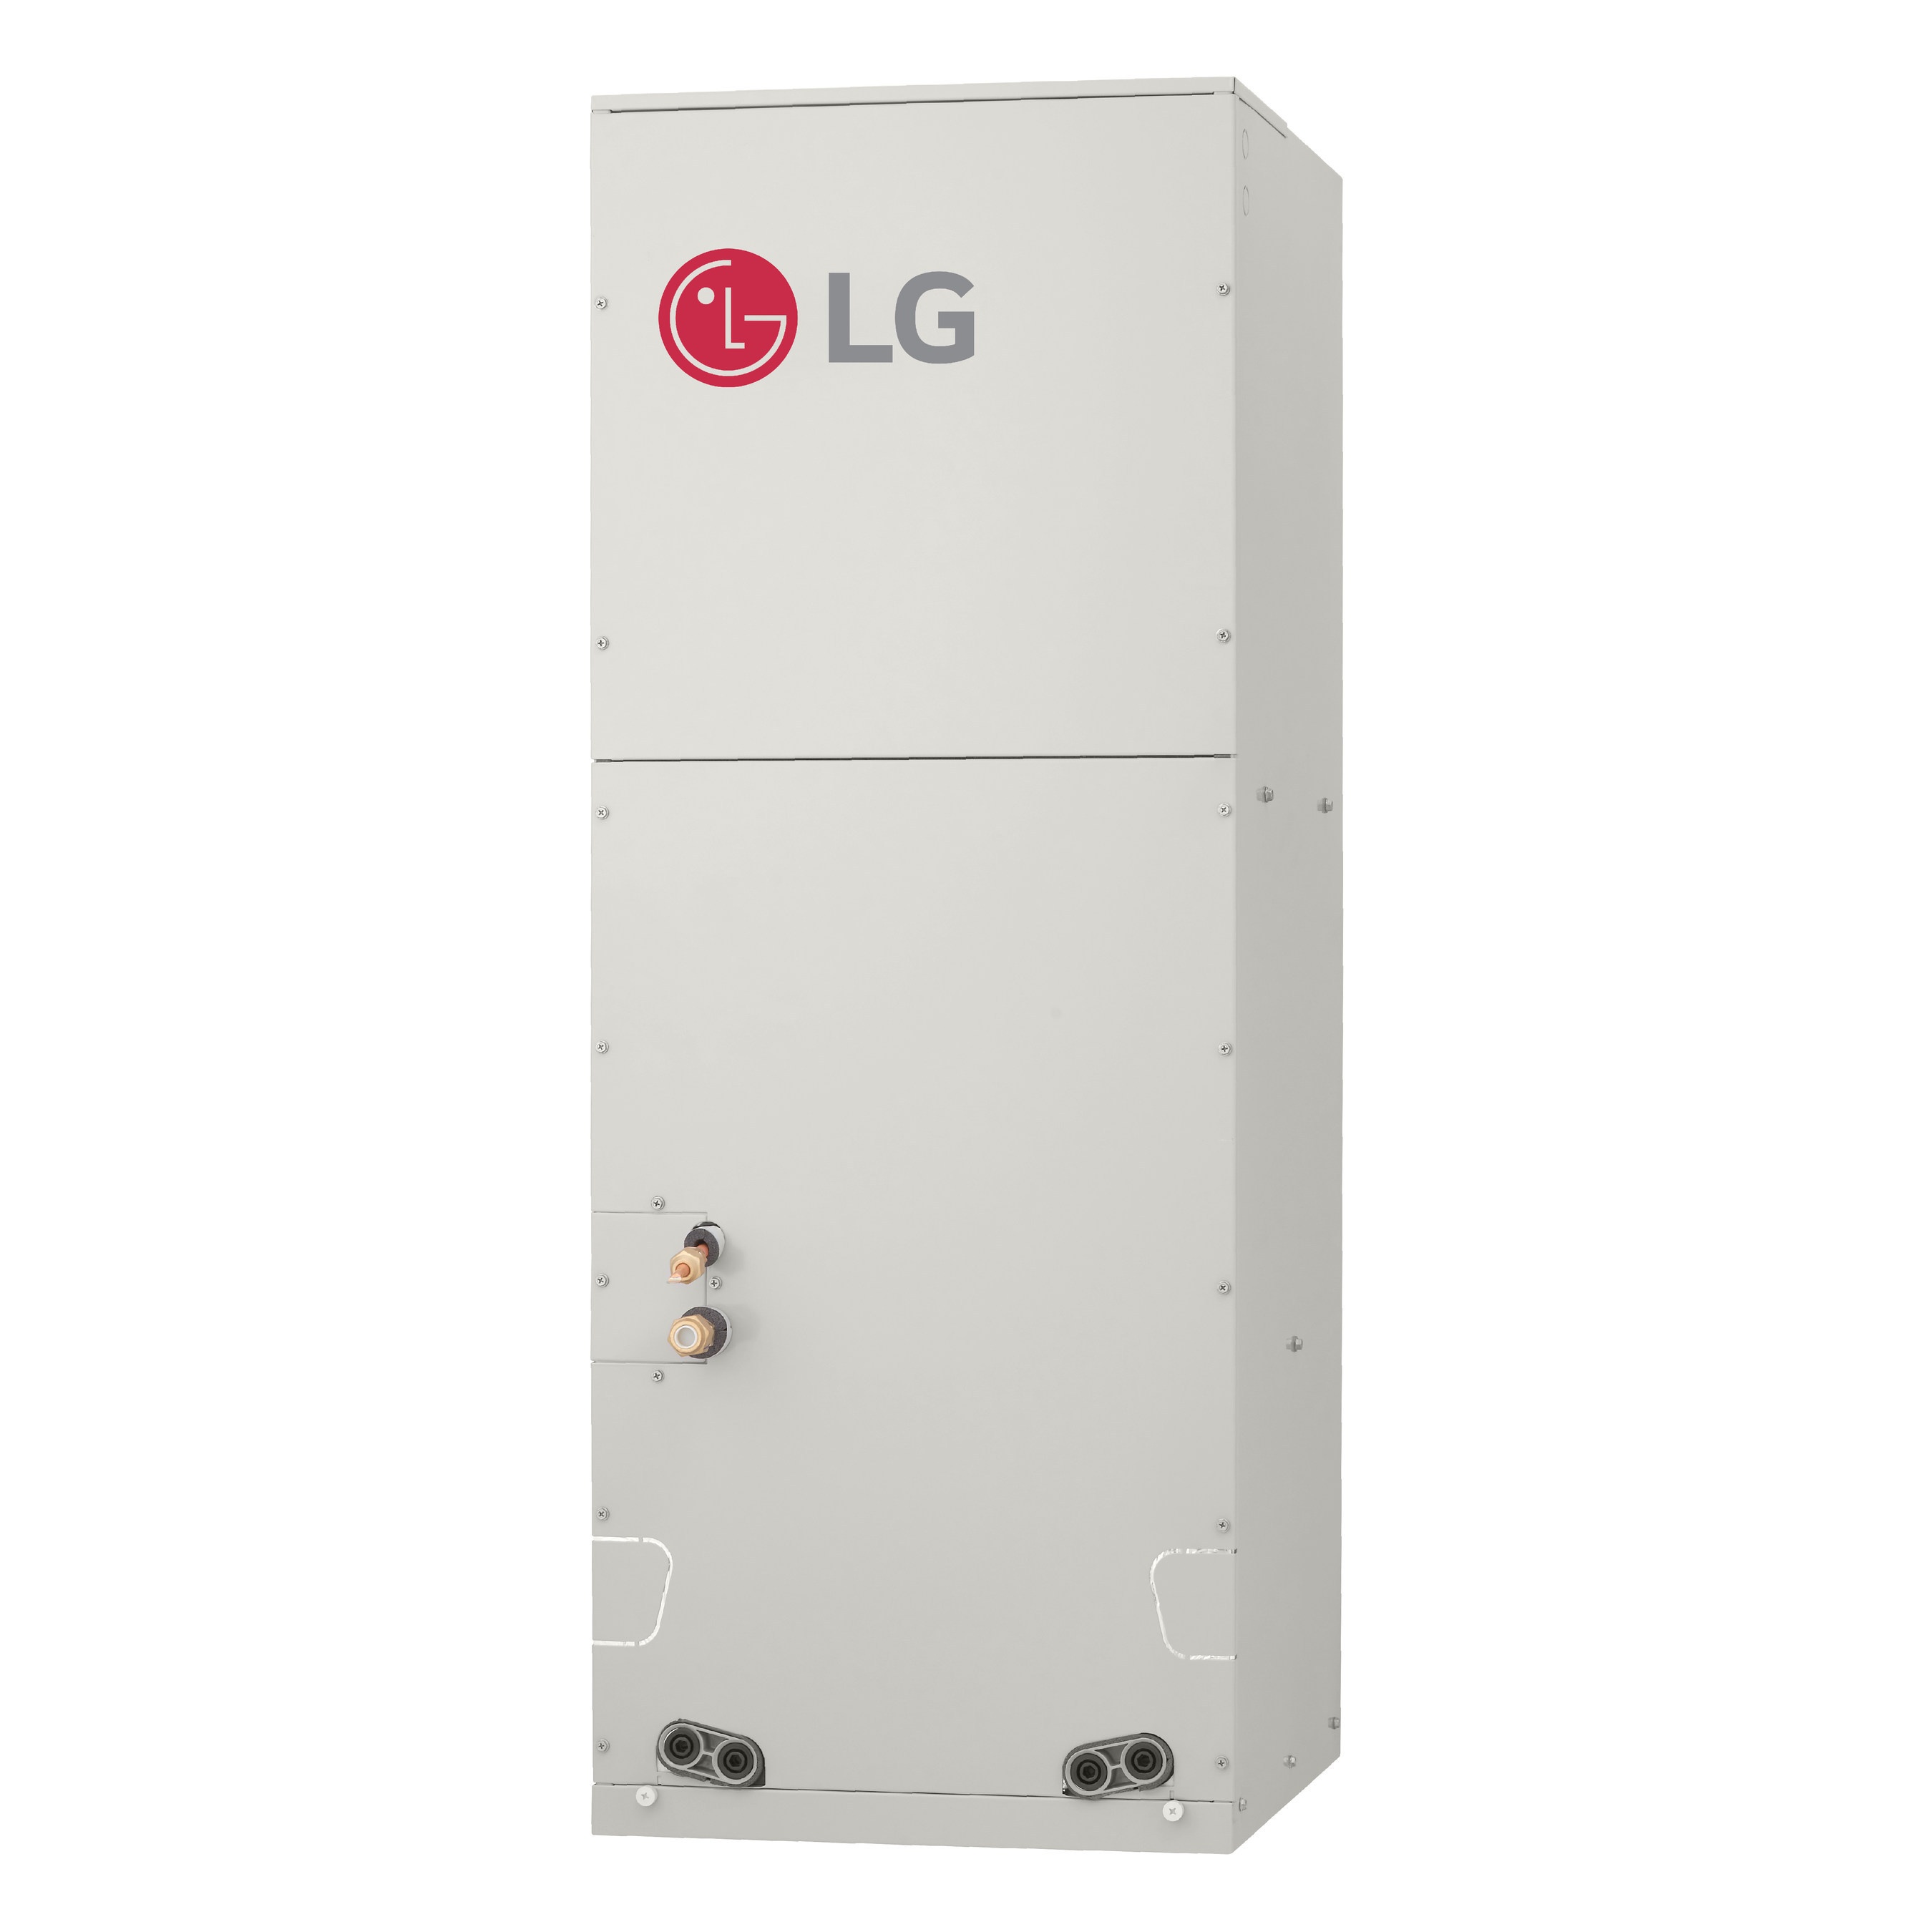 LG Innovative HVAC Solutions Take 2019 AHR Expo By Storm